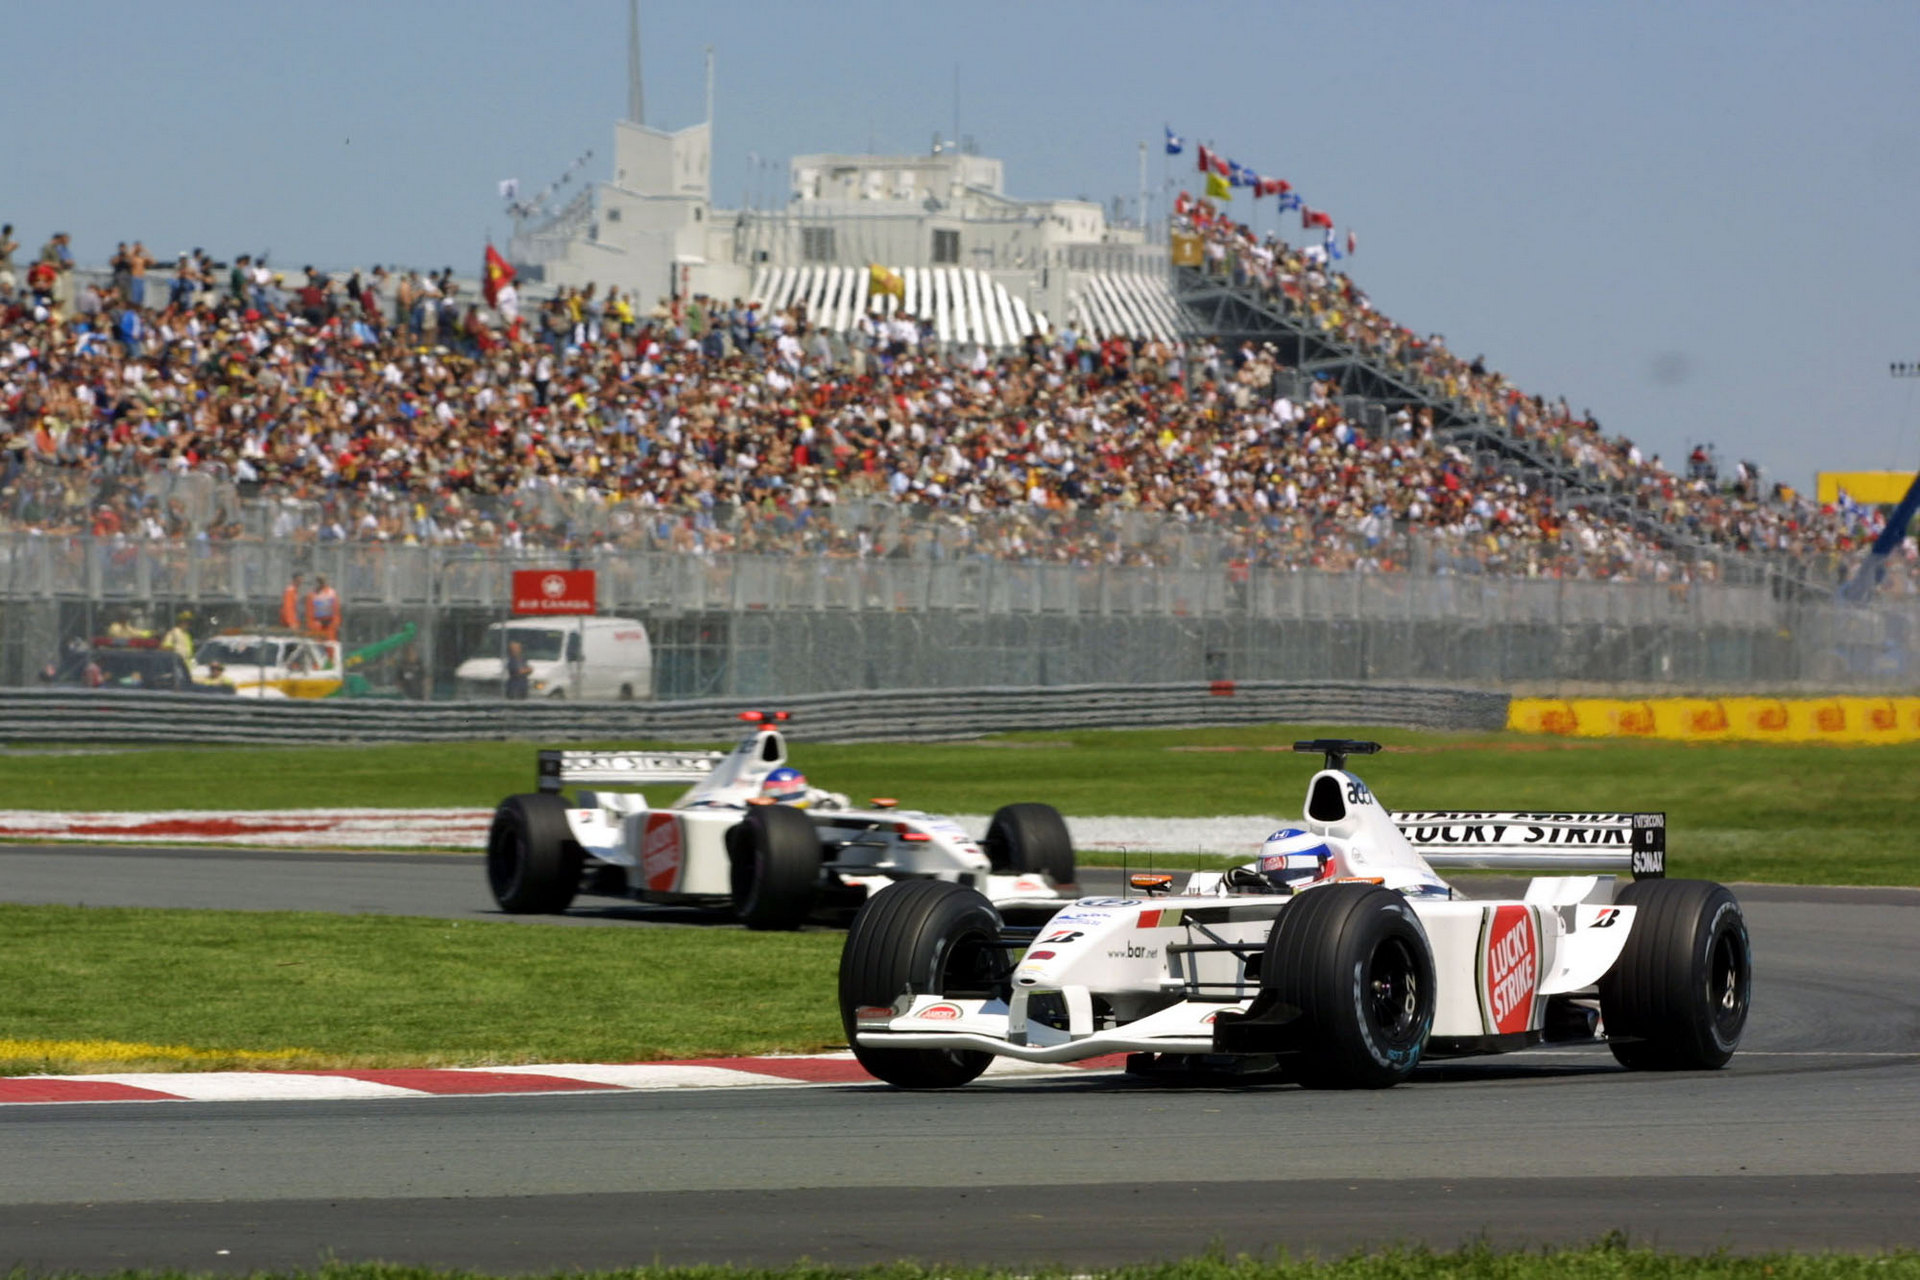 HD Wallpapers 2002 Formula 1 Grand Prix of Canada | F1 Fansite